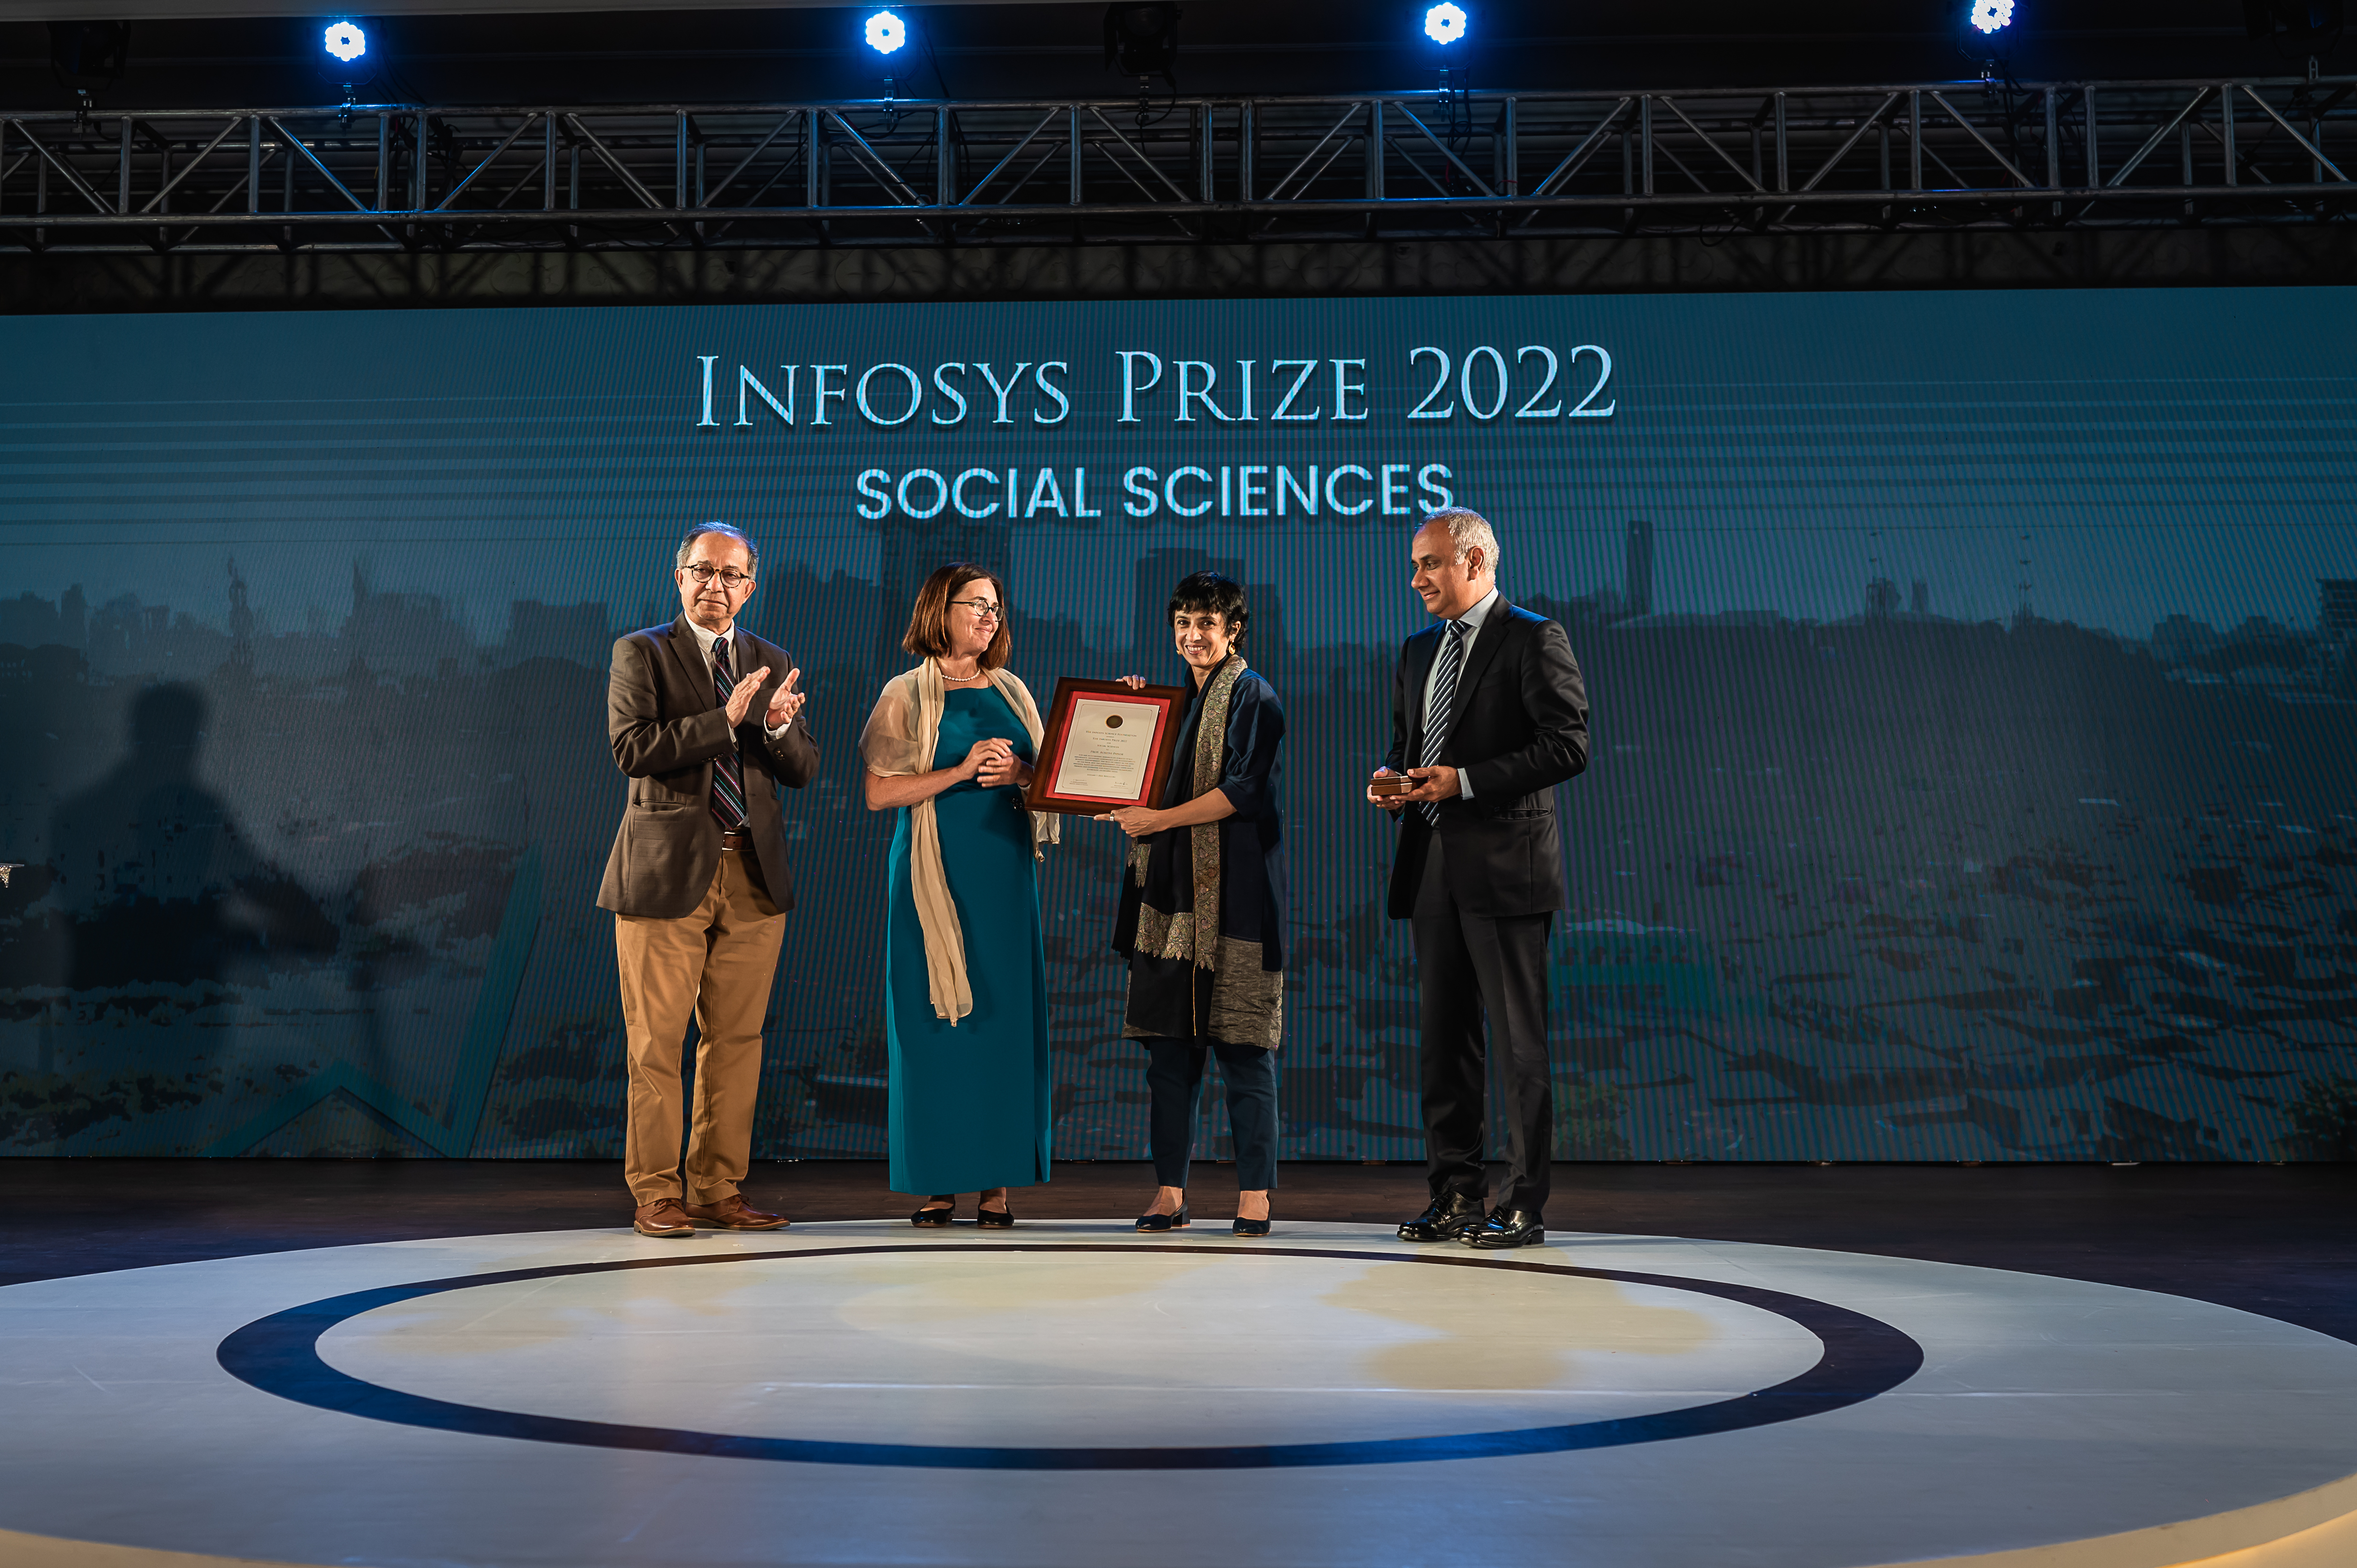 Prof. Kaushik Basu, Prof. Shafi Goldwasser and Mr. Salil Parekh presenting the Infosys Prize 2022 to Prof. Rohini Pande